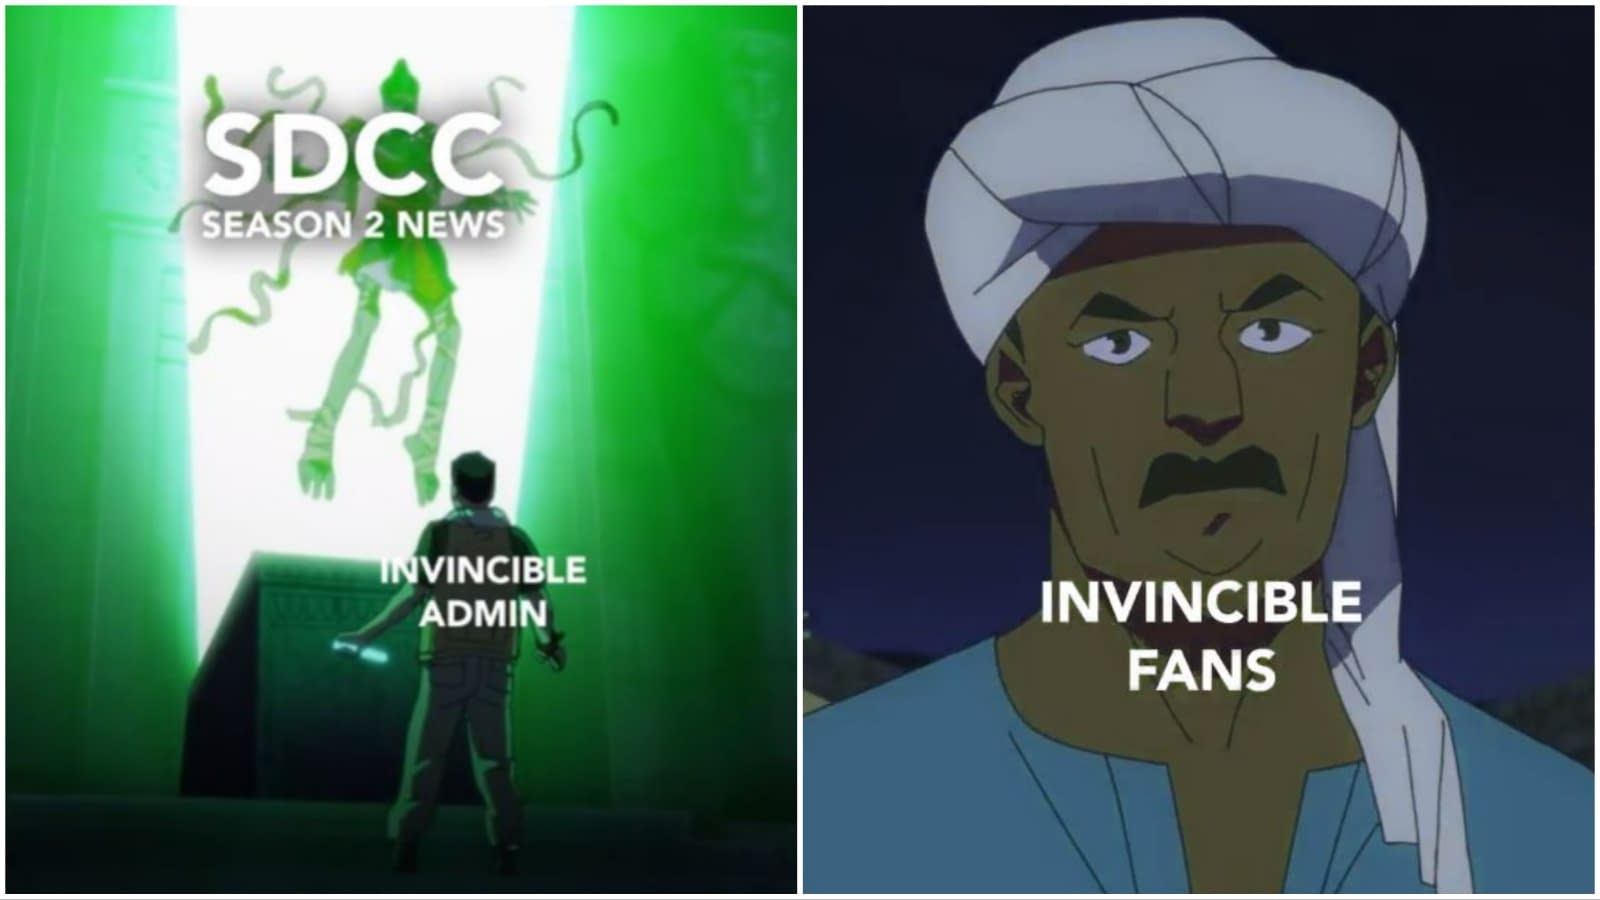 Invincible season 2 cast, trailer, plot, reviews, and more news